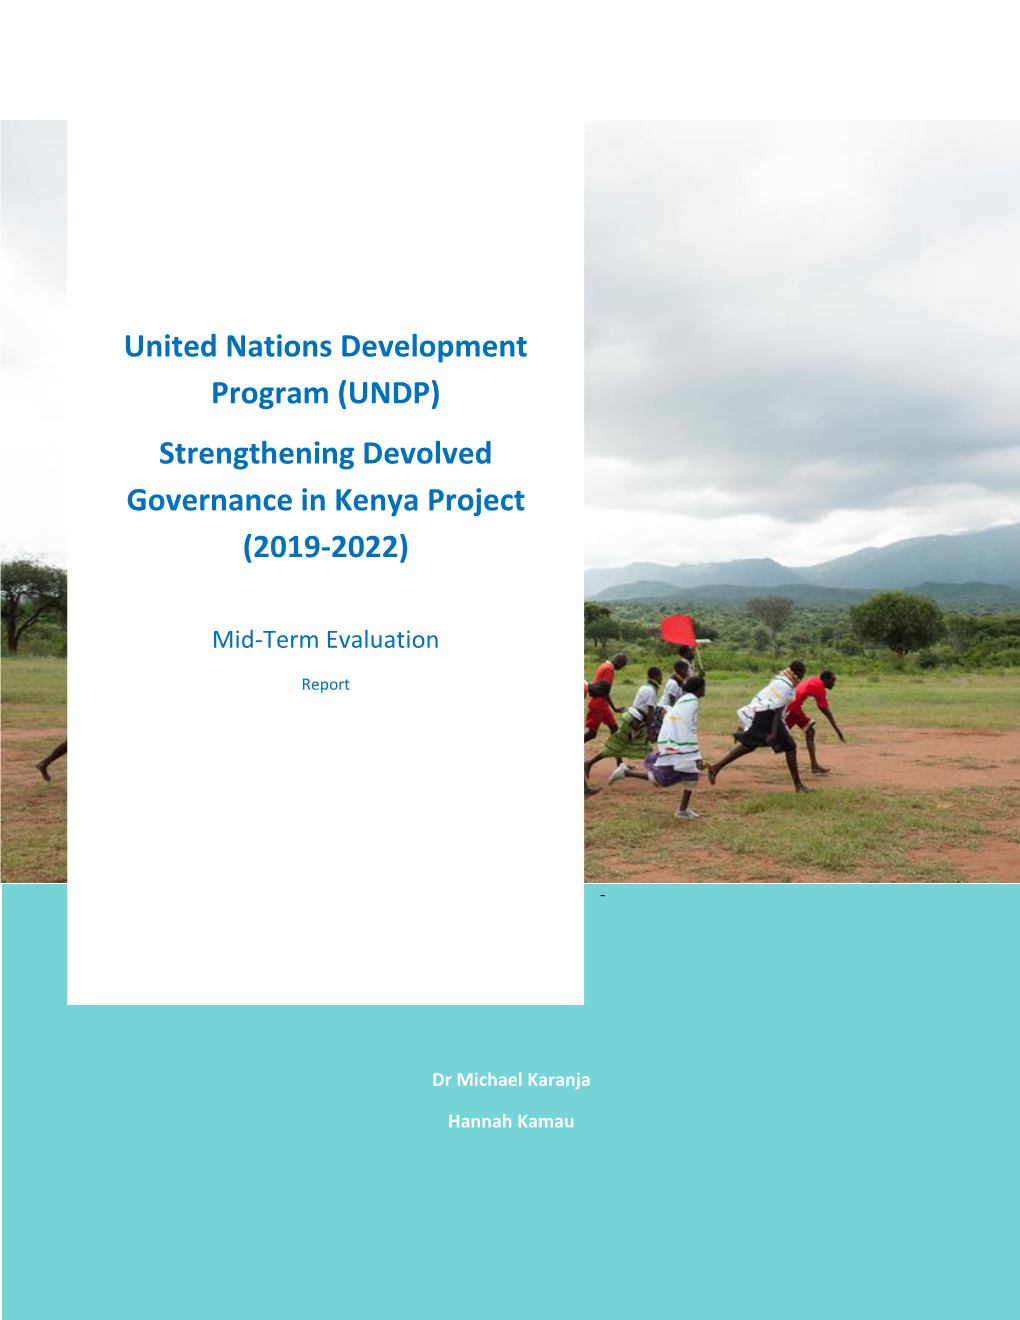 UNDP) Strengthening Devolved Governance in Kenya Project (2019-2022